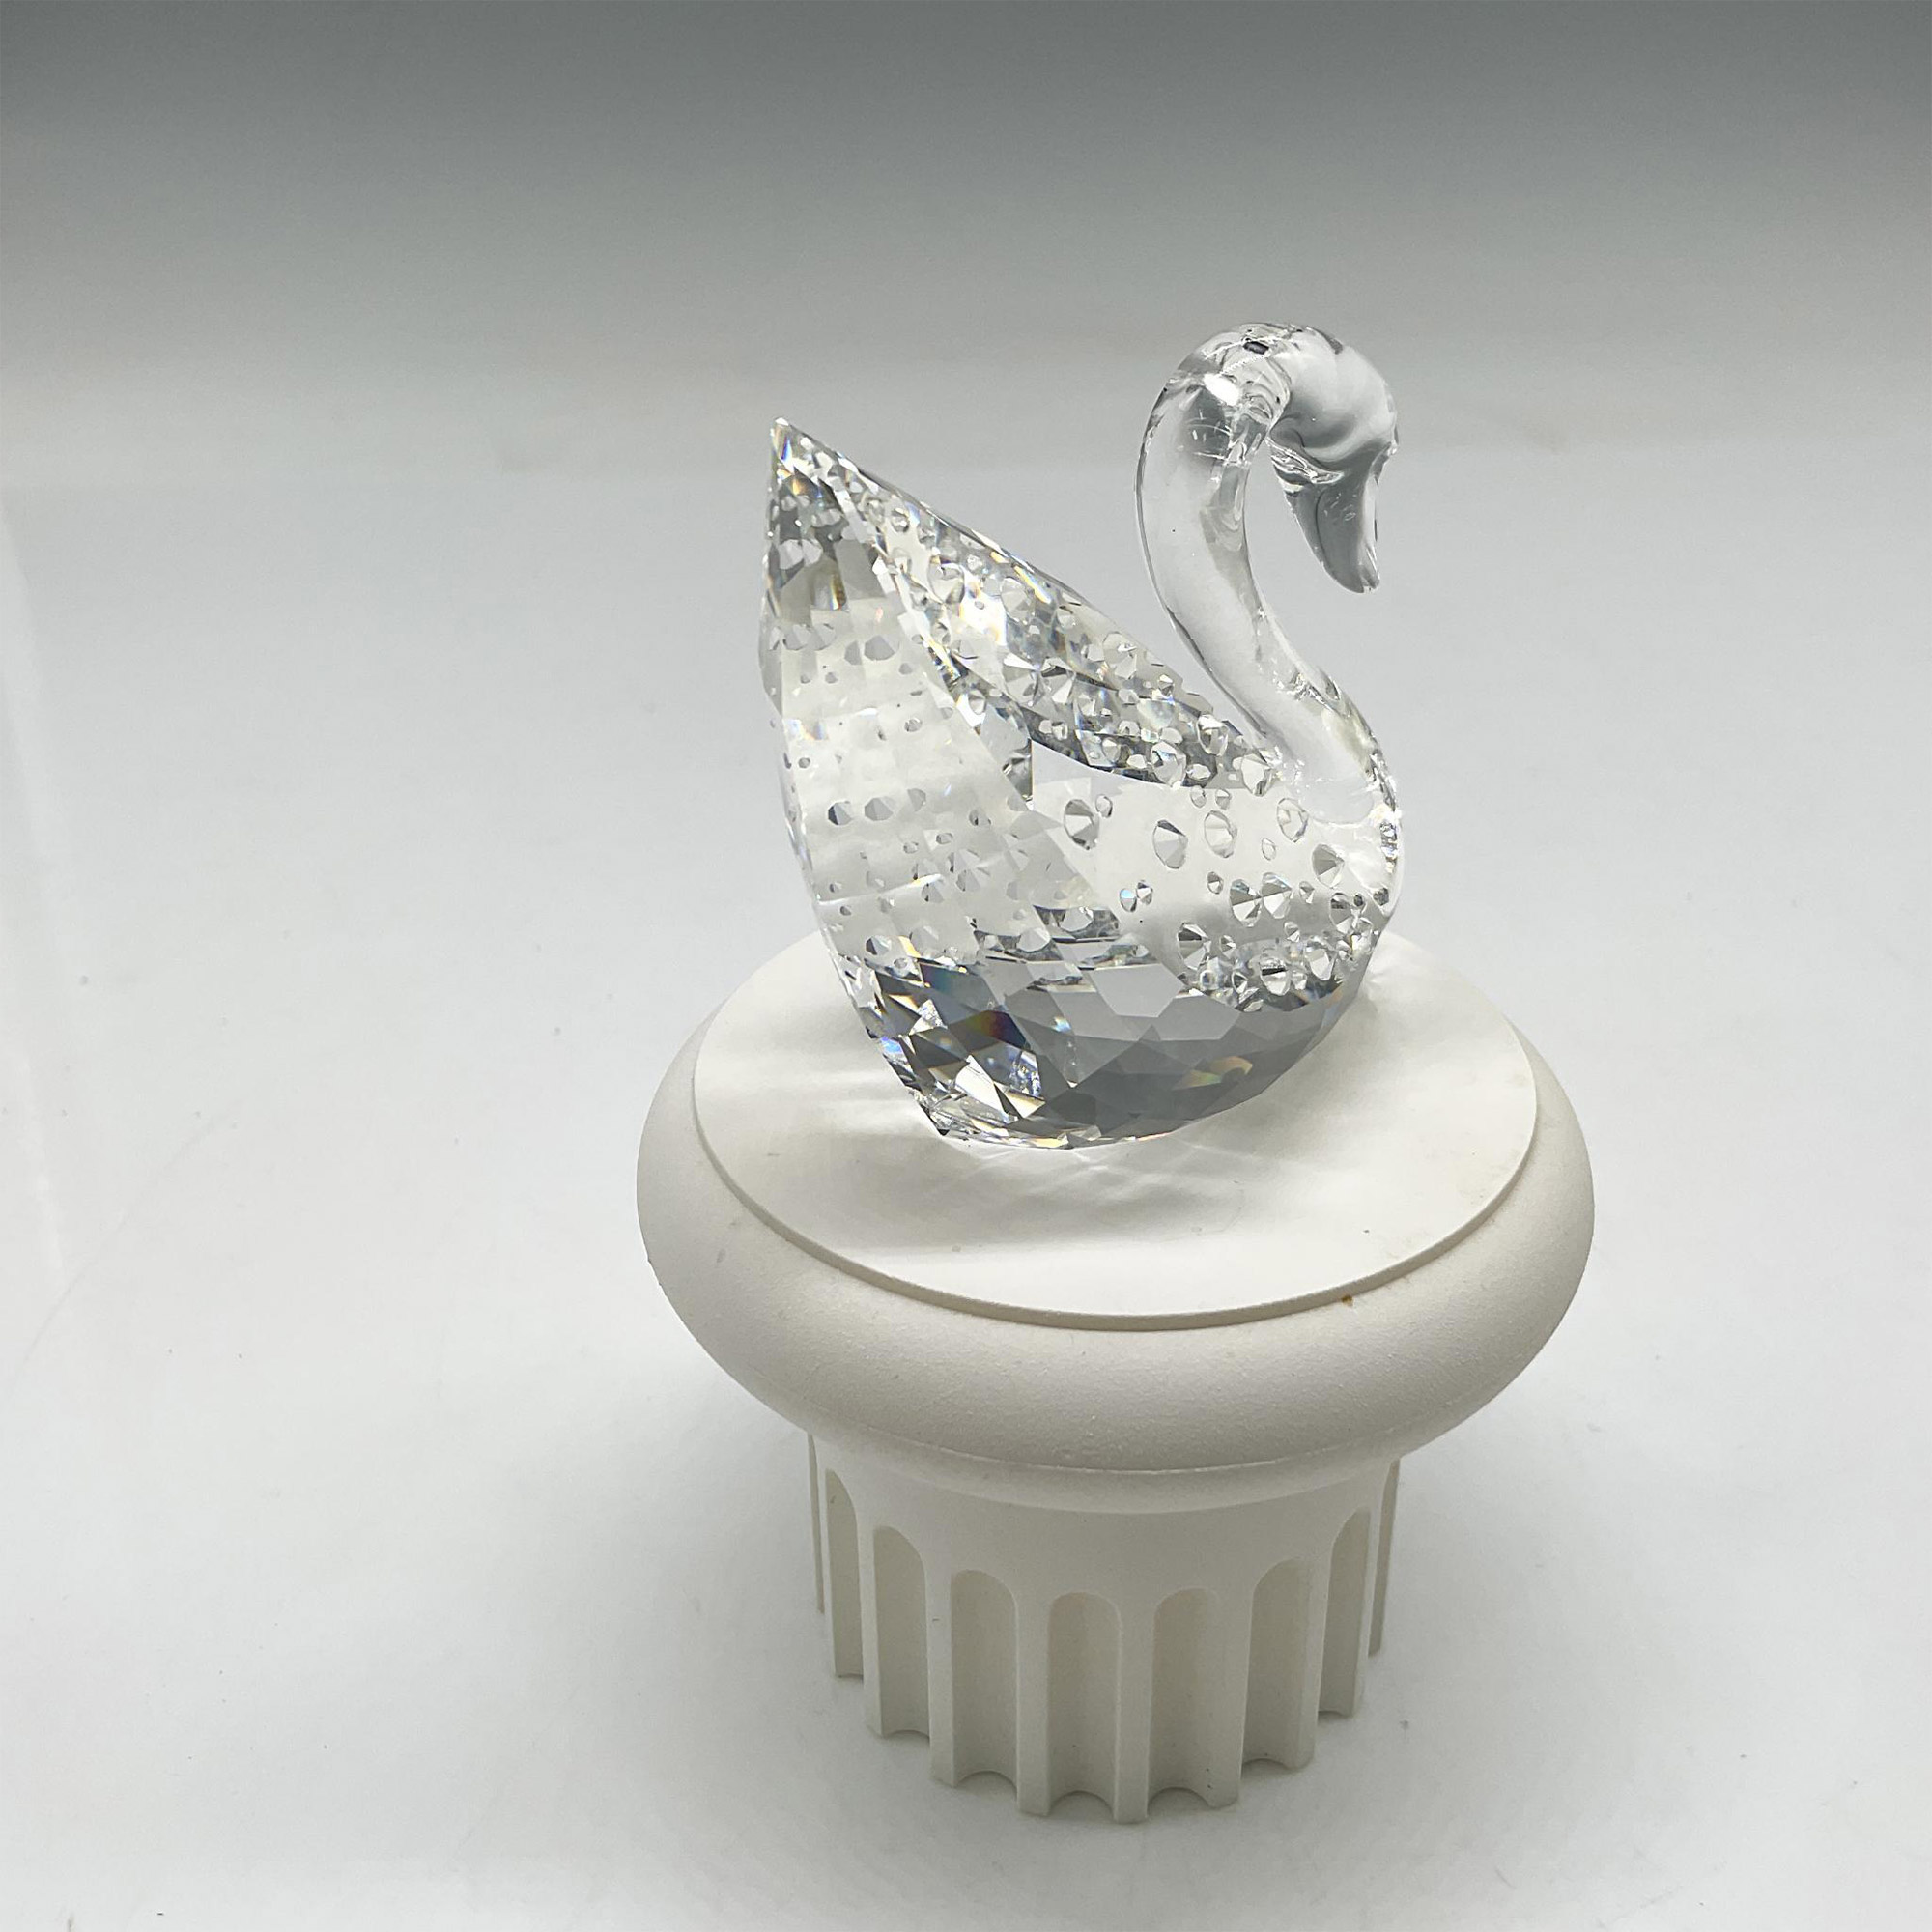 Swarovski Silver Crystal Figurine, Centenary Swan - Image 2 of 4